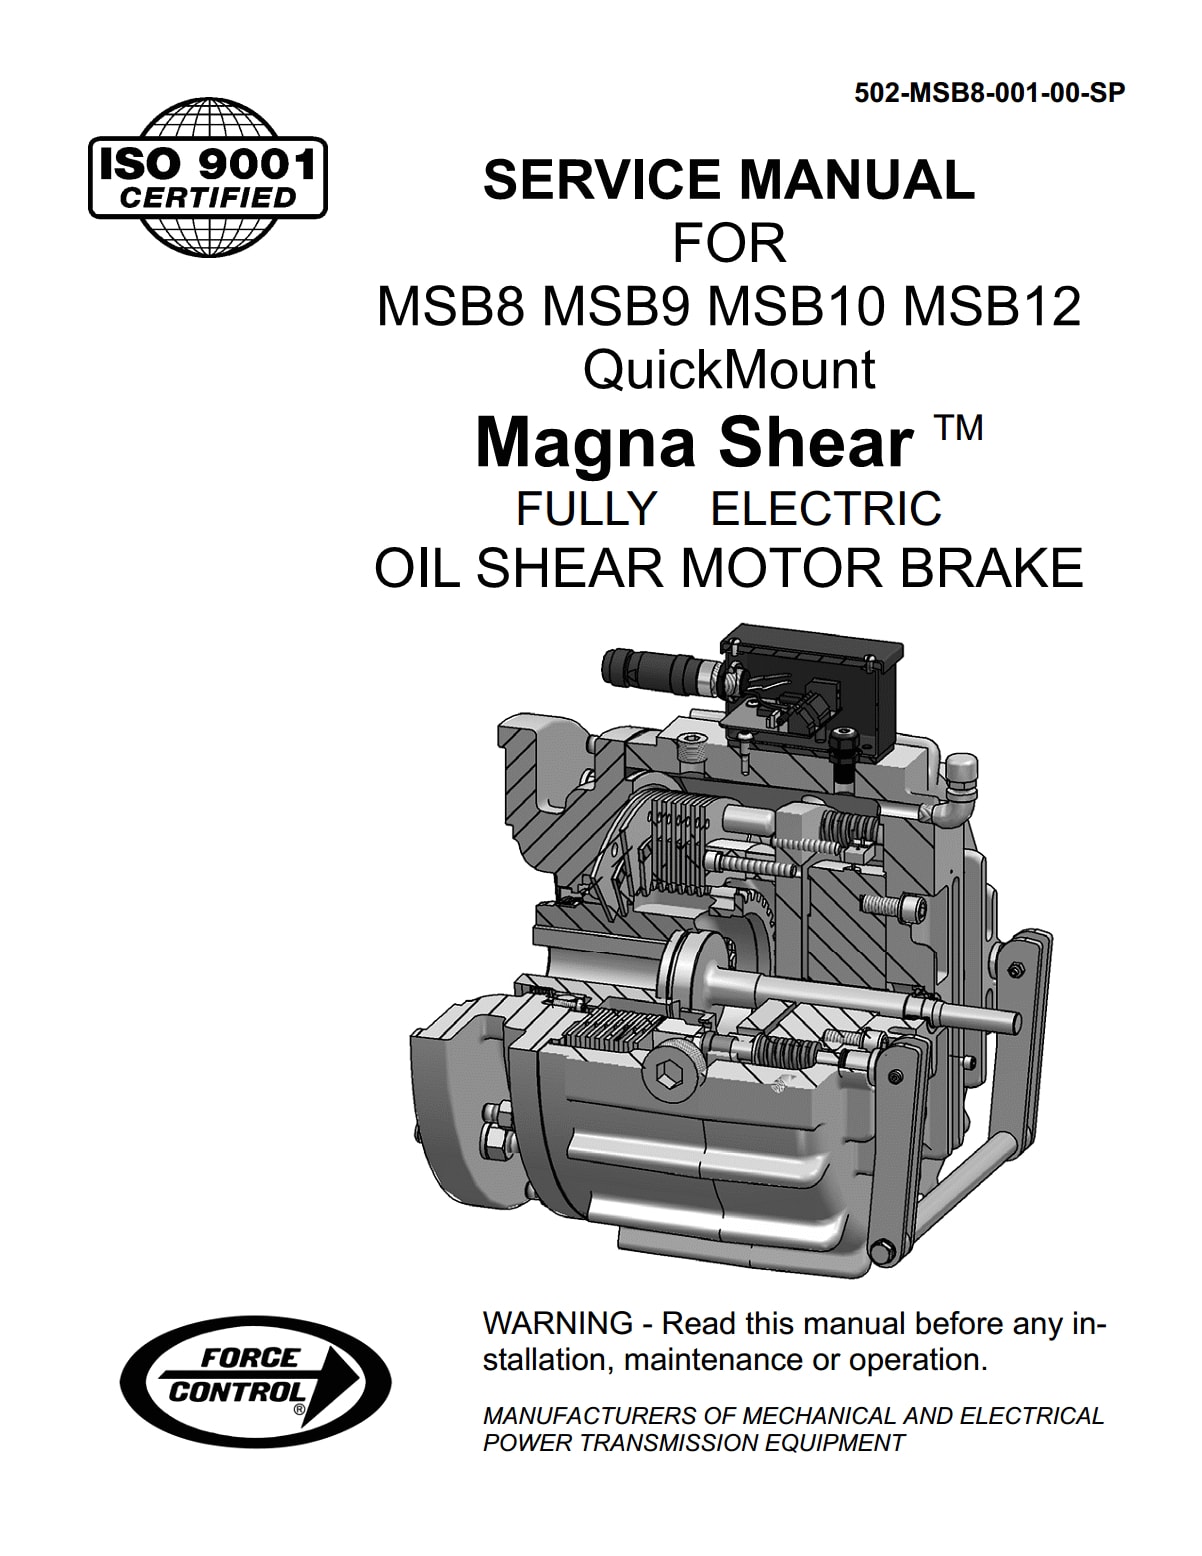 MSB8-9-10-12 Magnashear Manual 502-MSB8-001-00-SP Standard	Old Style MSB2 MagnaShear